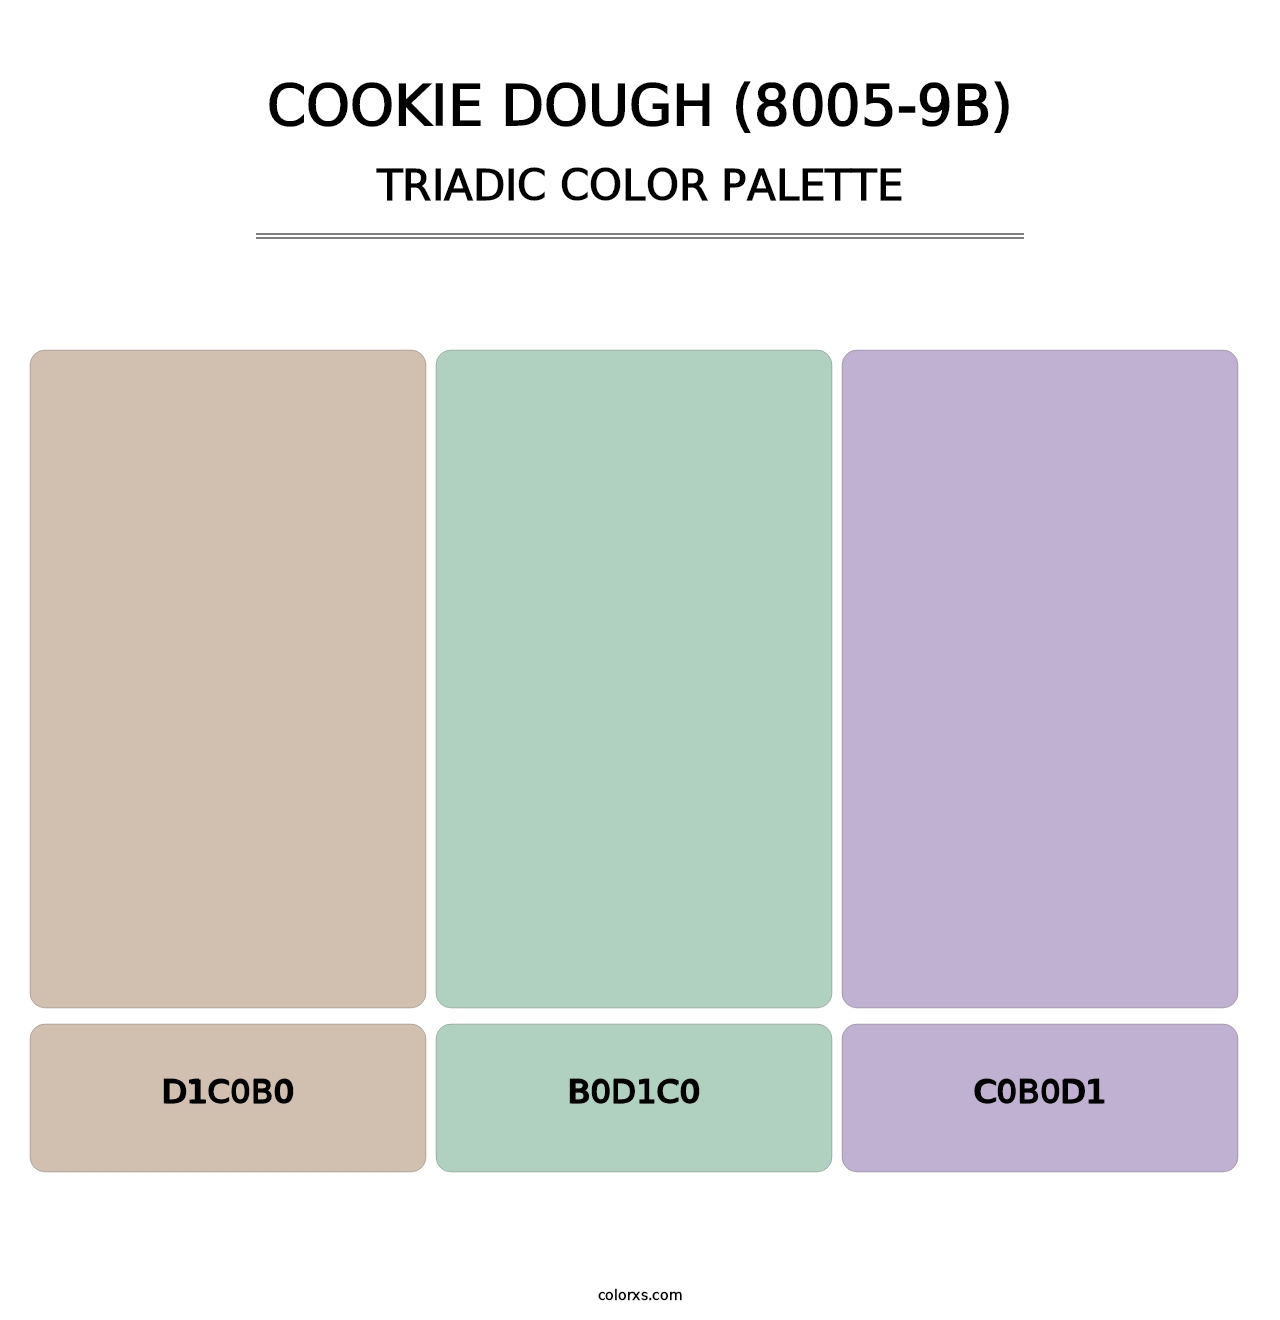 Cookie Dough (8005-9B) - Triadic Color Palette